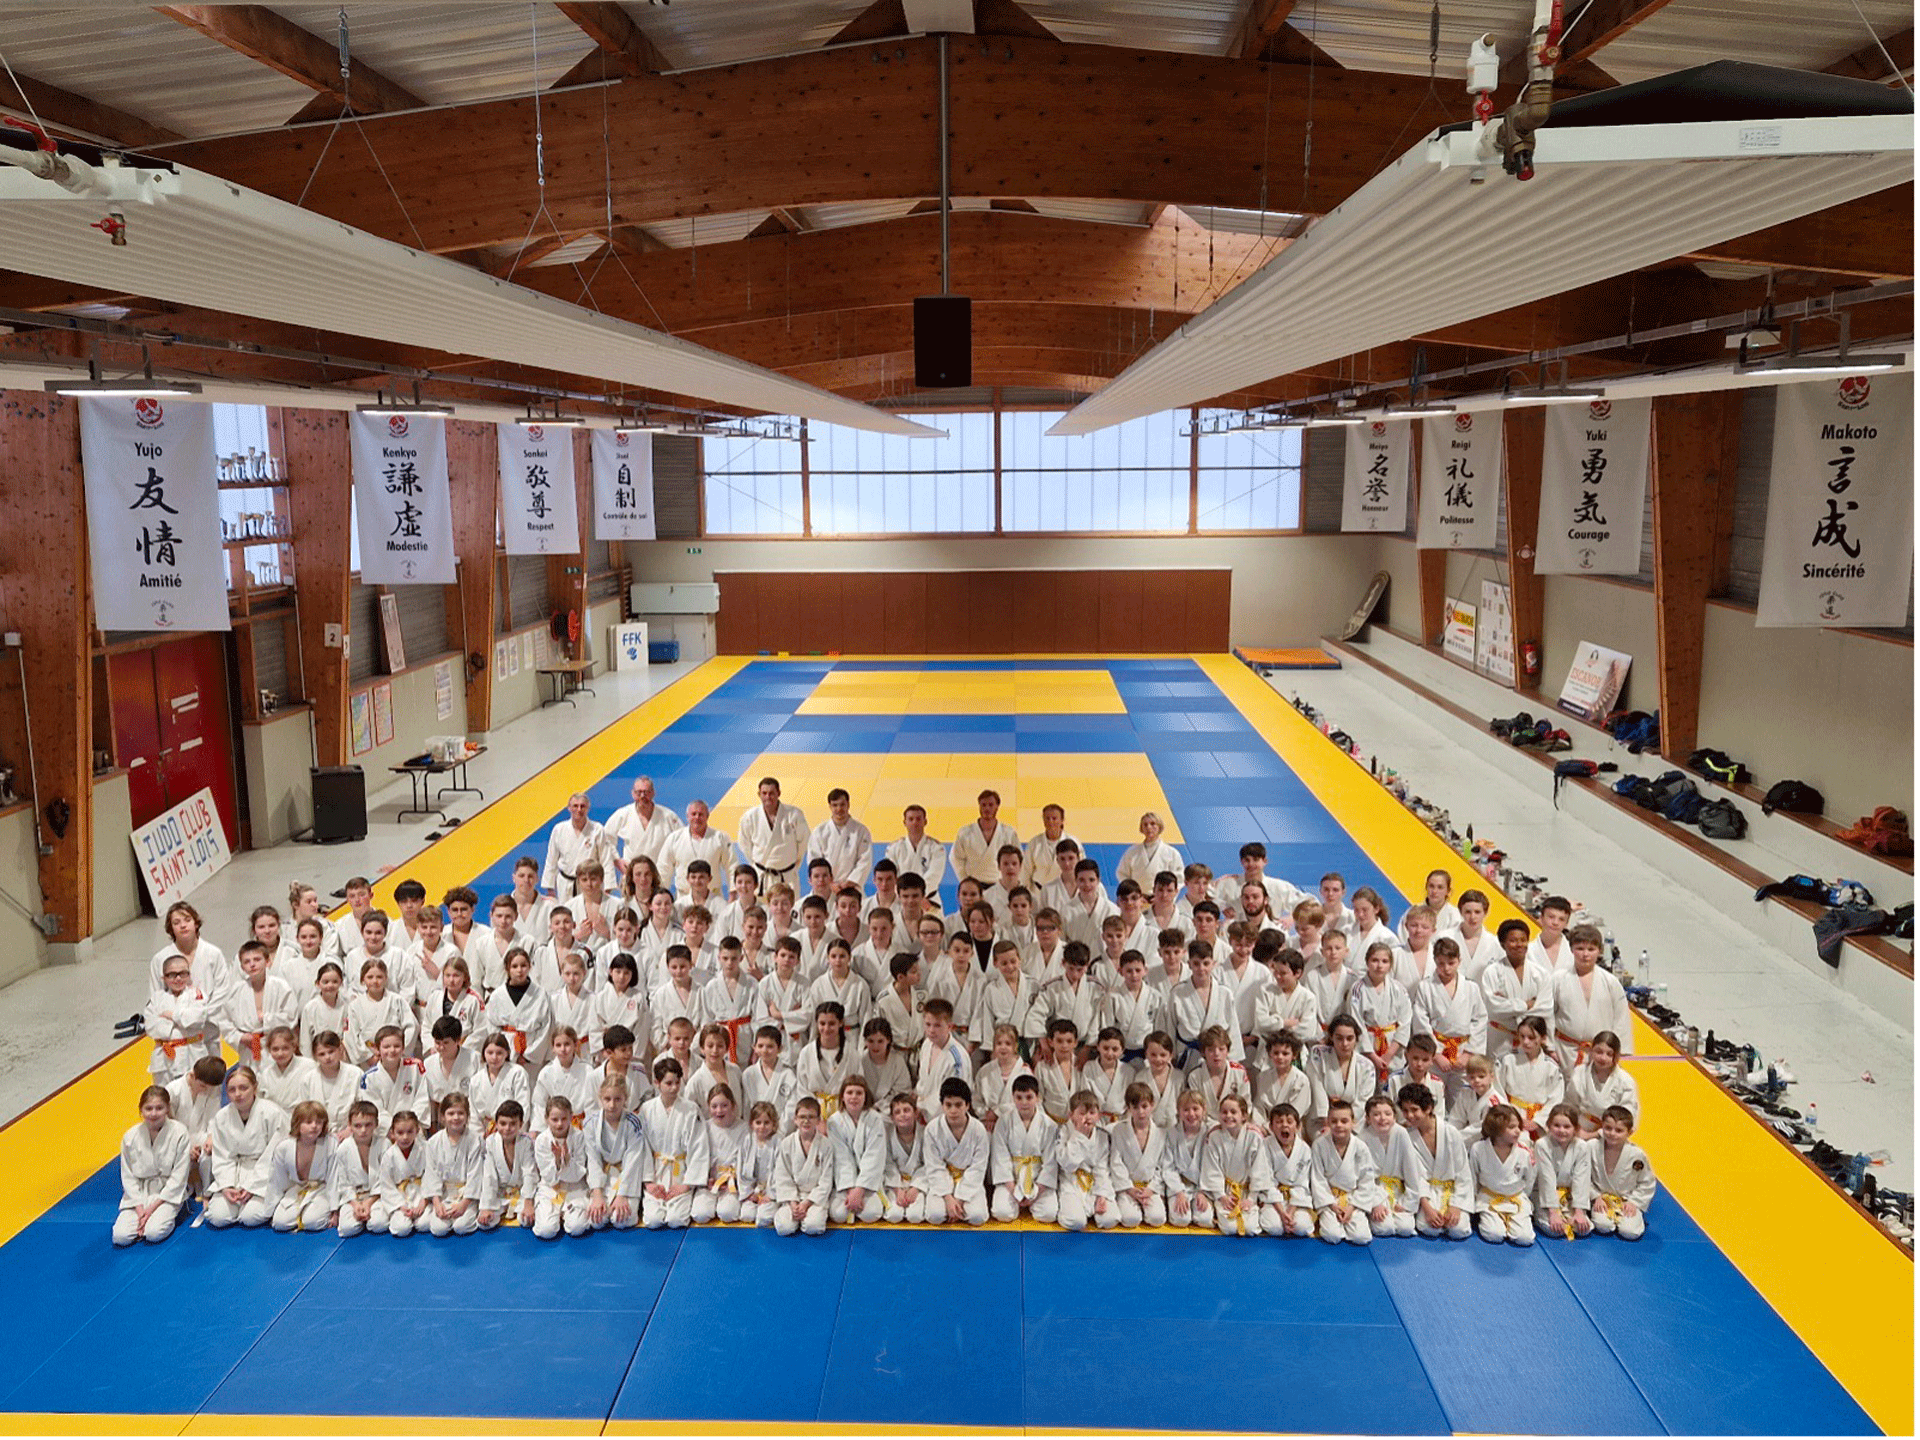 judo-groupe-clt-tourlaville-sport